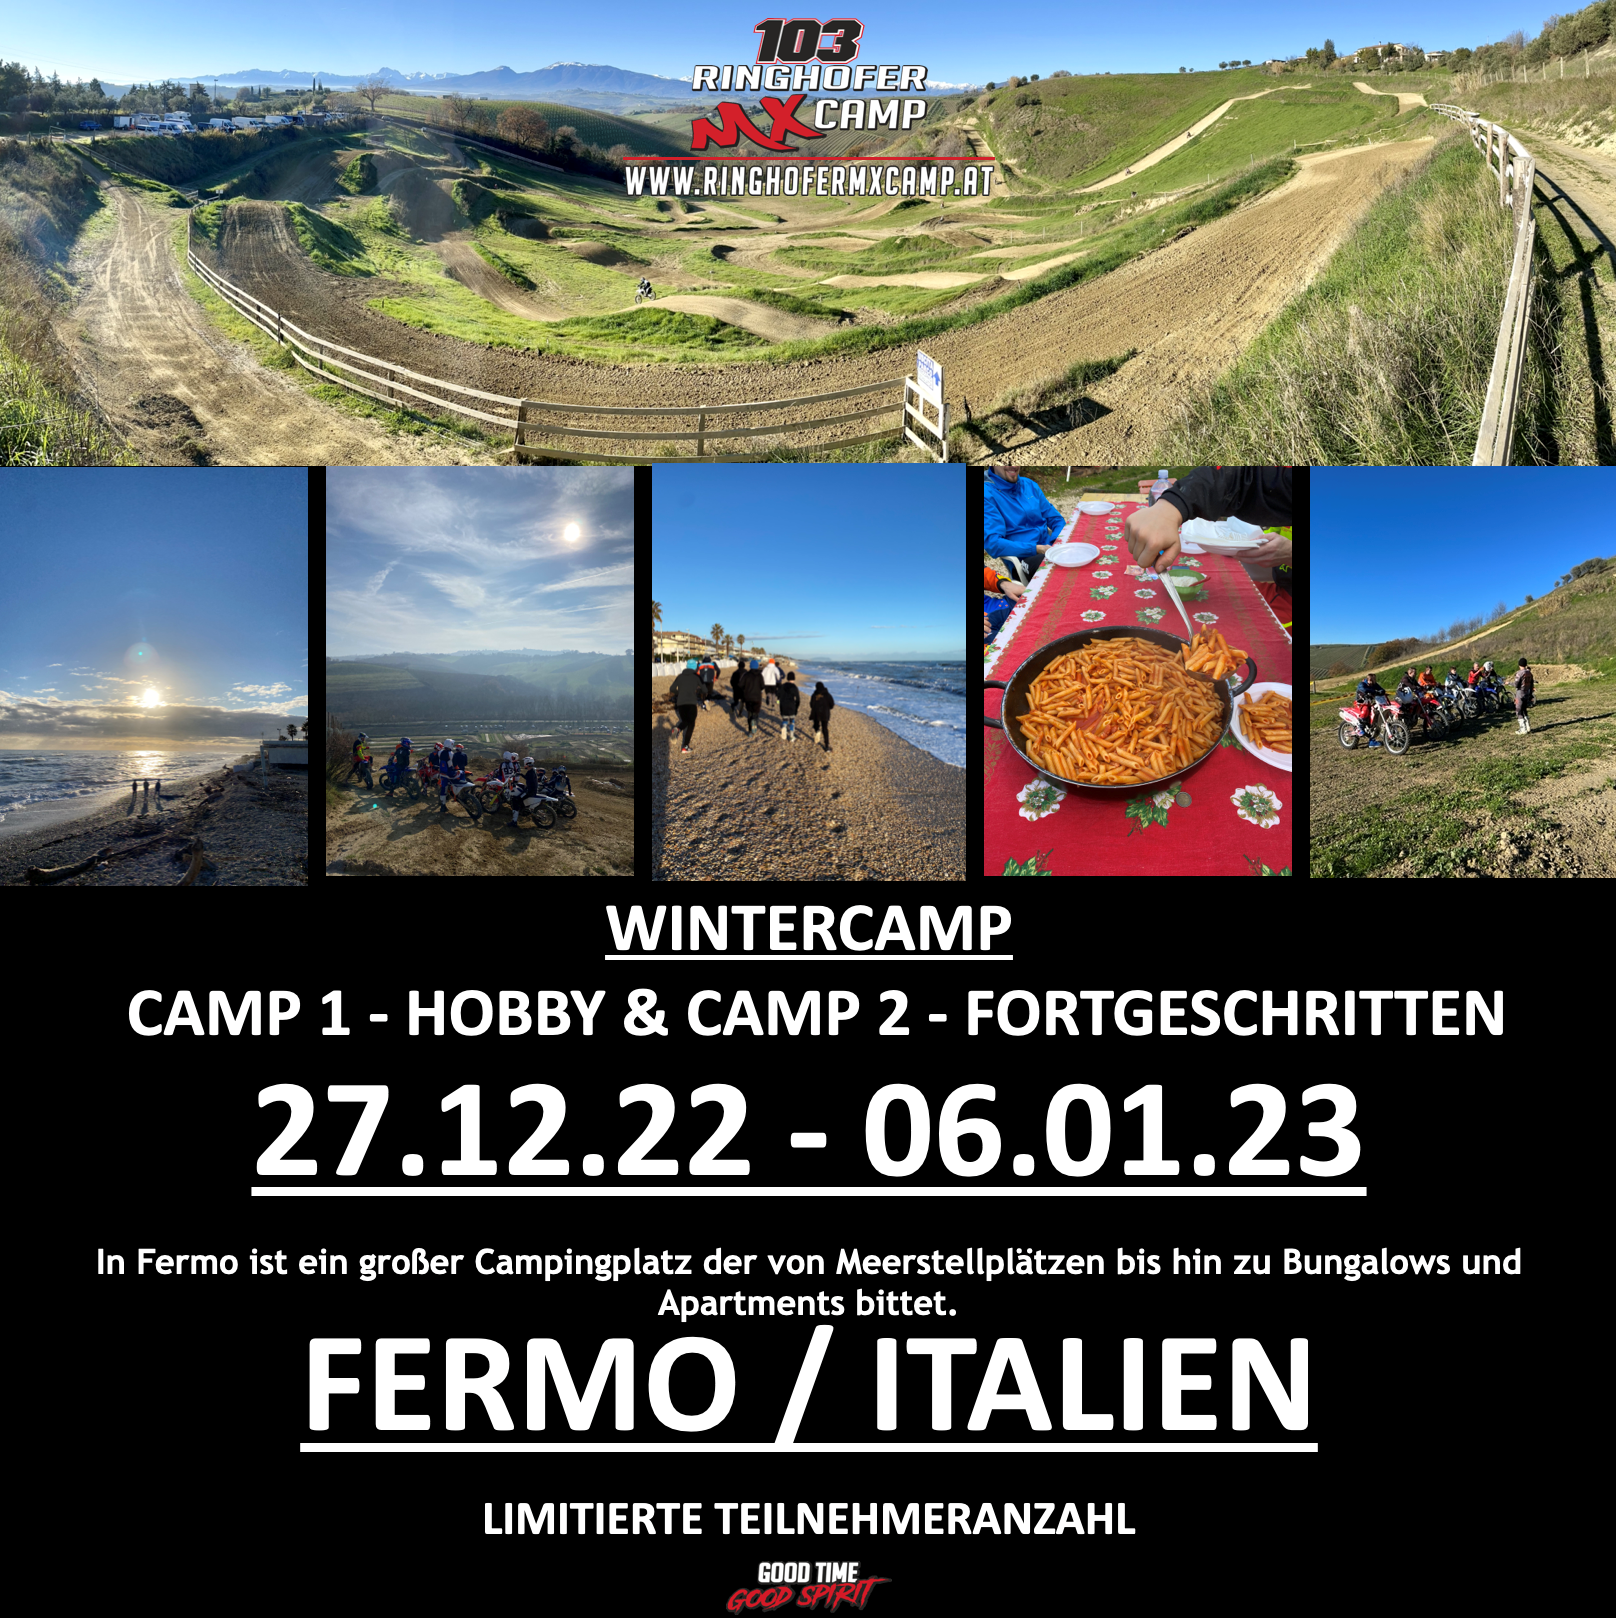 Ringhofer MX Camp: Wintercamp in Italien !